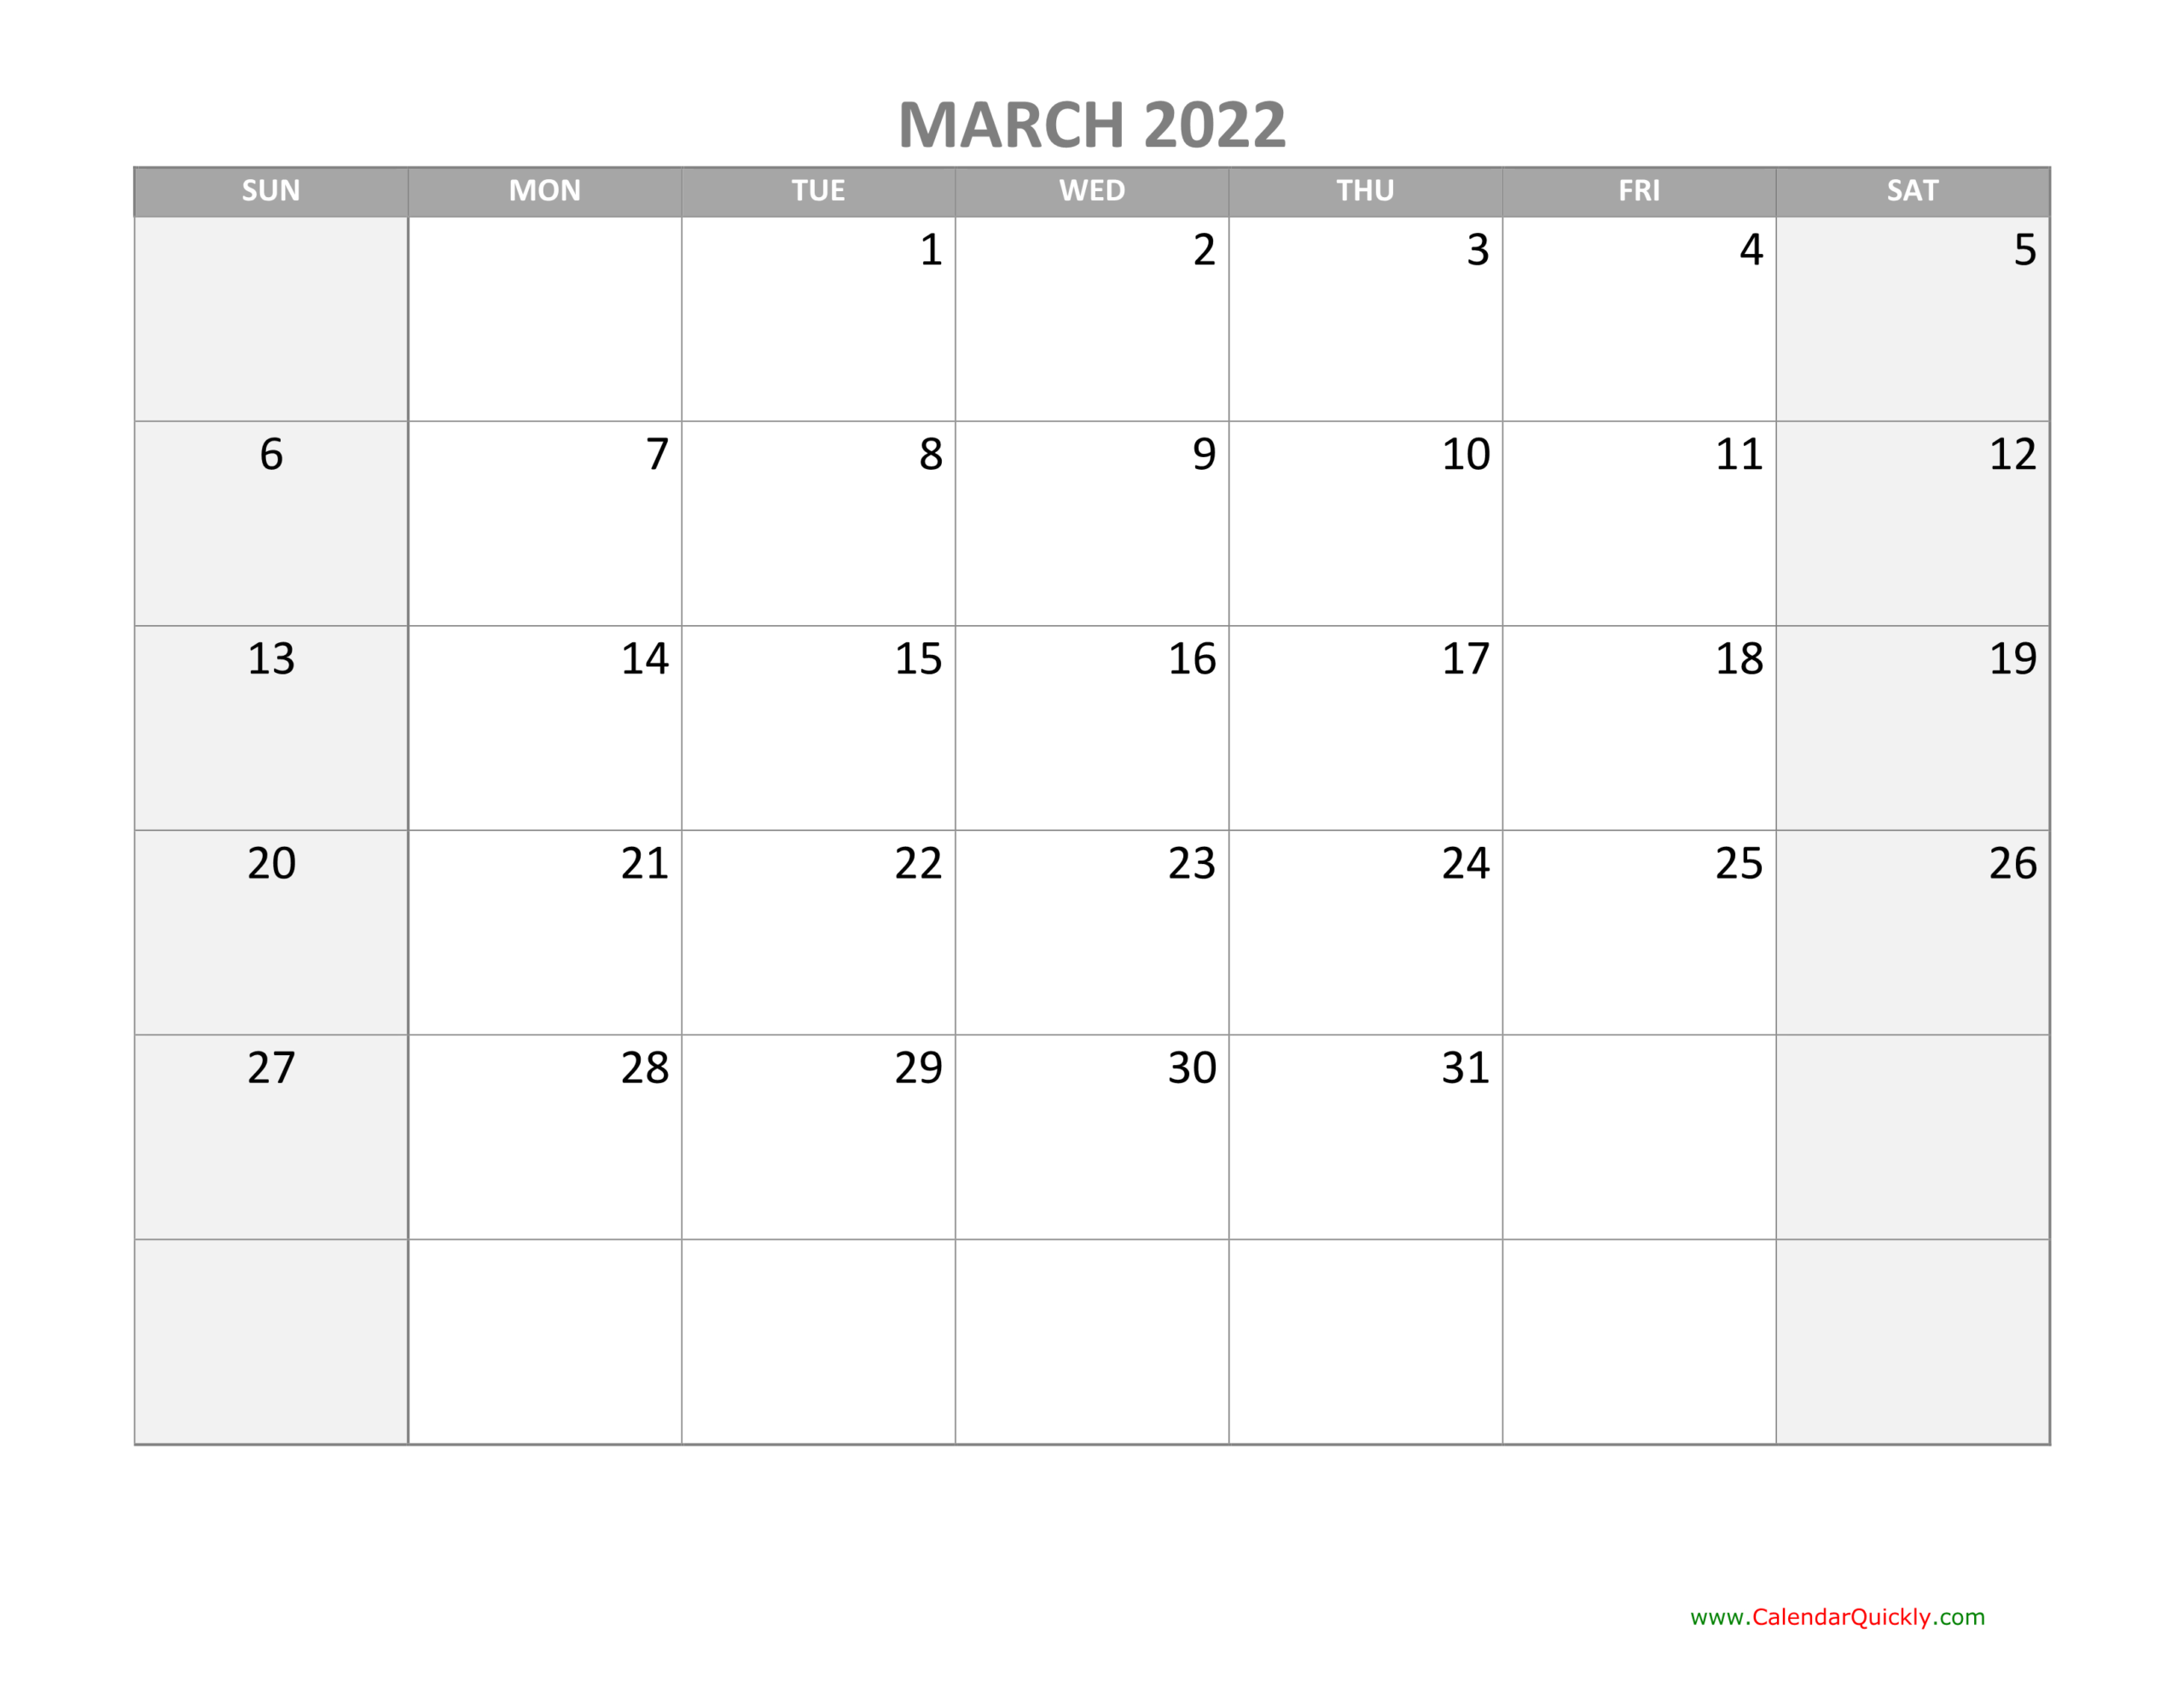 March Calendar 2022 With Holidays | Calendar Quickly  January Feb March April 2022 Calendar